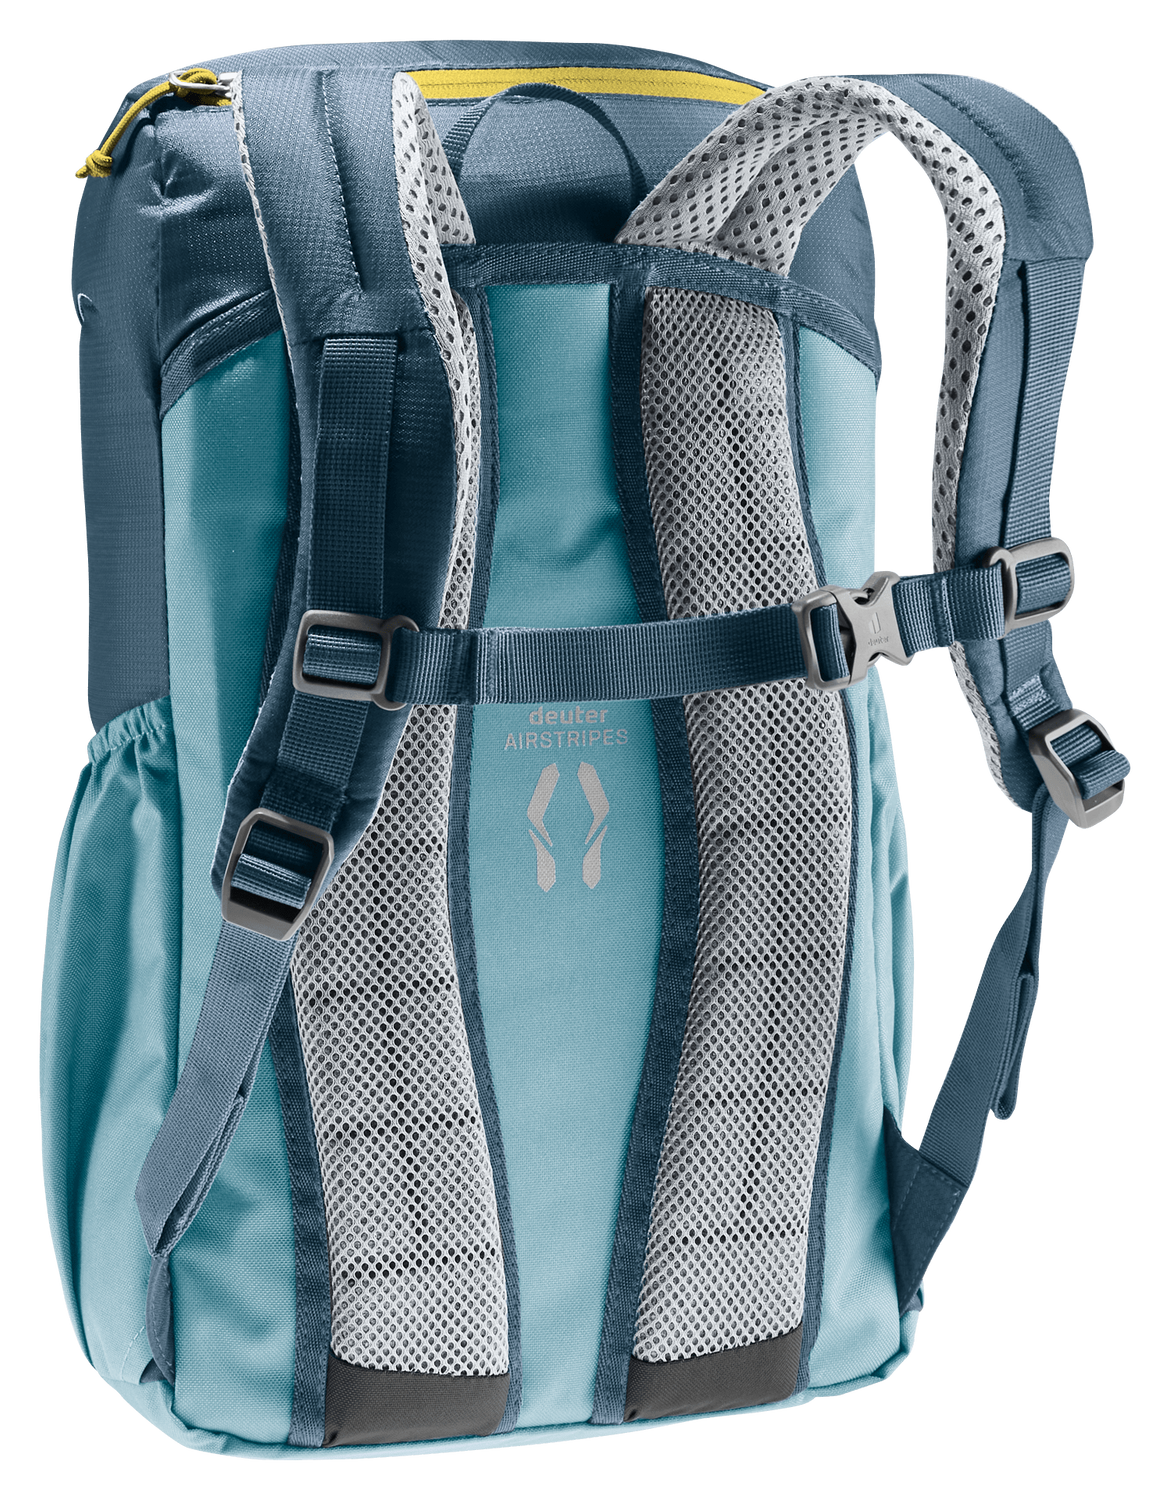 Children's backpack, blue tones